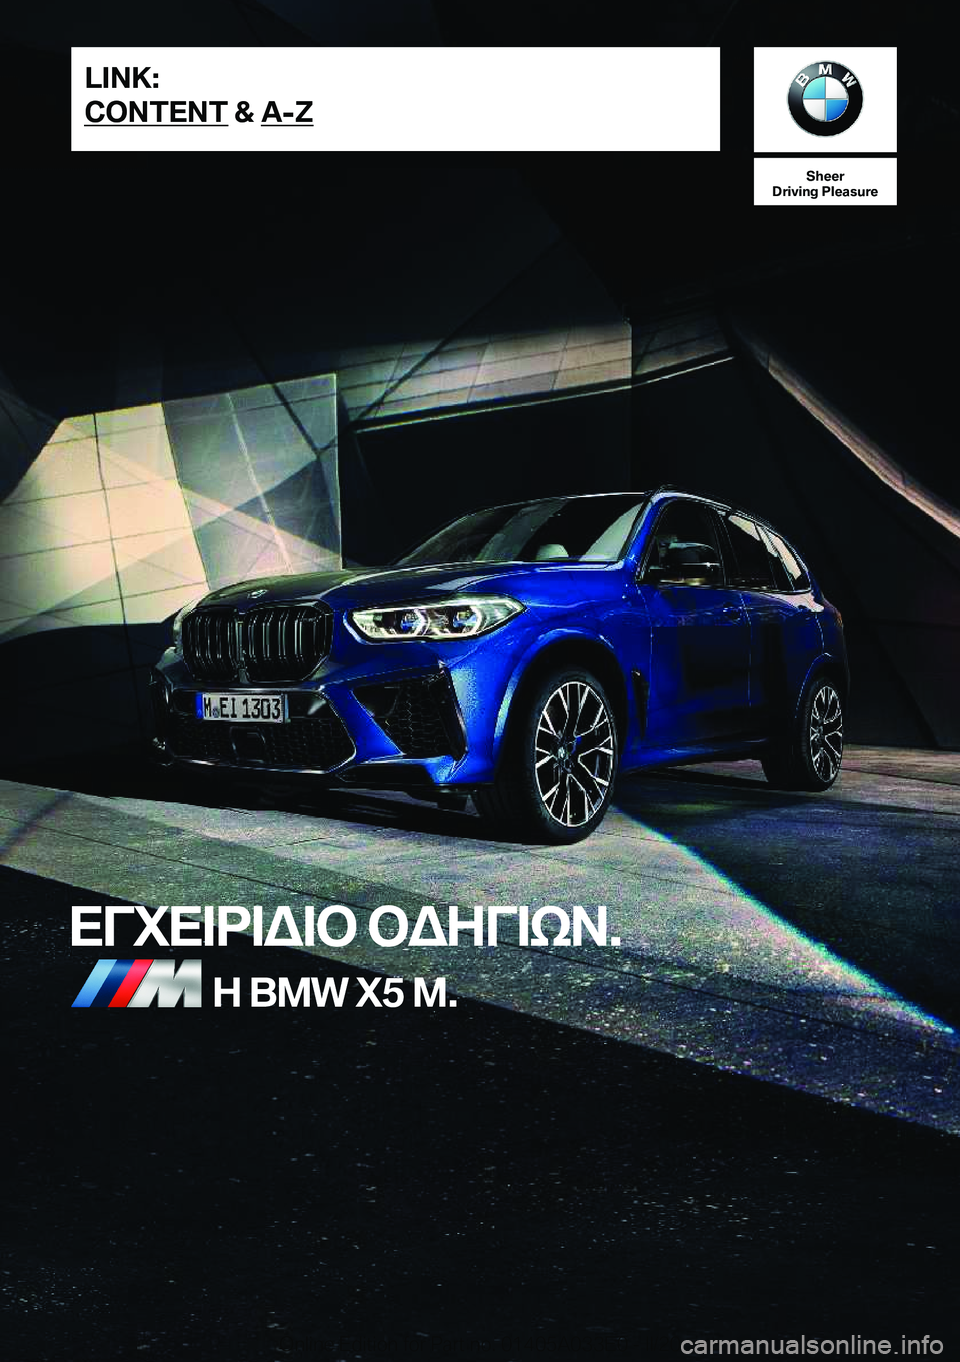 BMW X5 M 2020  ΟΔΗΓΌΣ ΧΡΉΣΗΣ (in Greek) �S�h�e�e�r
�D�r�i�v�i�n�g��P�l�e�a�s�u�r�e
XViX=d=W=b�bWZV=kA�.Z��B�M�W��X�5��M�.�L�I�N�K�:
�C�O�N�T�E�N�T��&��A�-�Z�O�n�l�i�n�e��E�d�i�t�i�o�n��f�o�r��P�a�r�t��n�o�.��0�